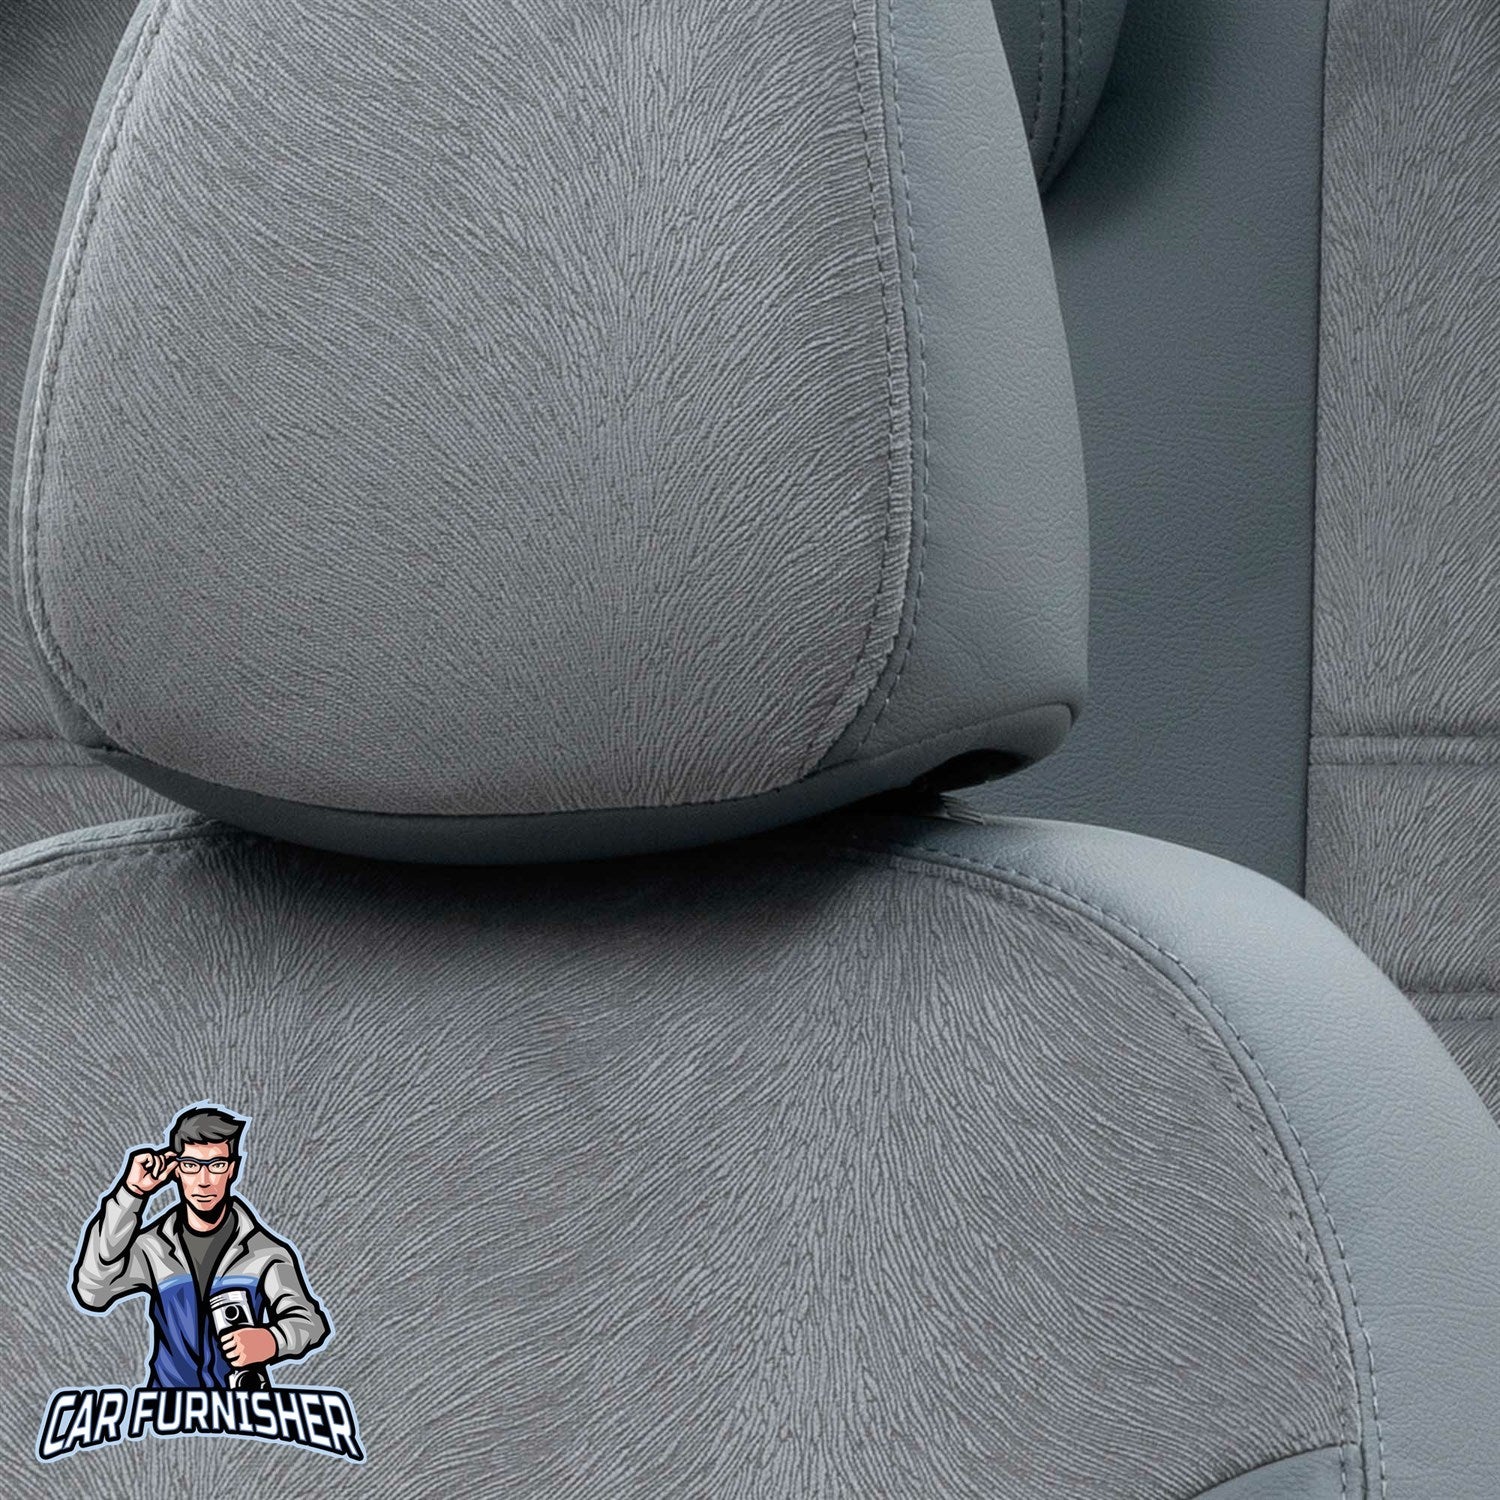 VW Bora Car Seat Cover 1998-2006 1J London Design Smoked Full Set (5 Seats + Handrest) Leather & Fabric